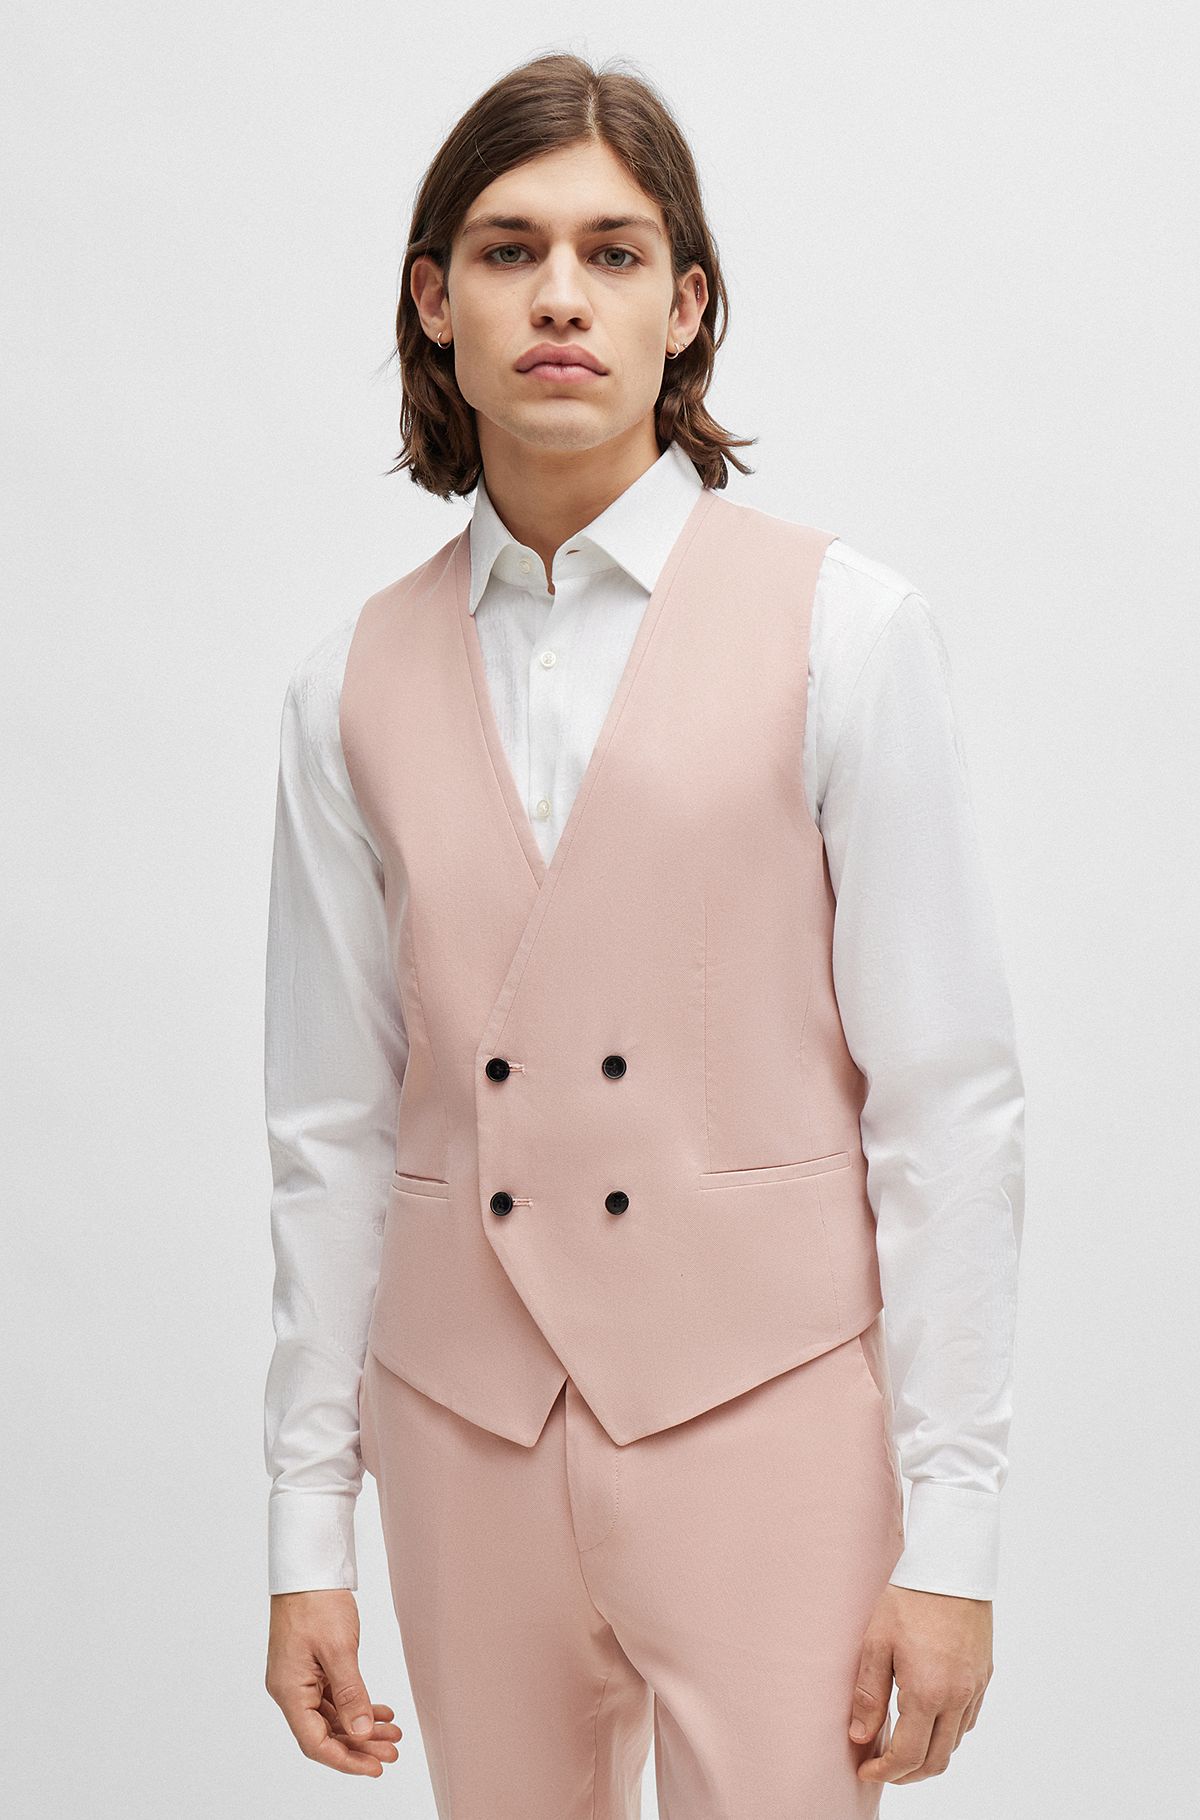 HUGO BOSS Three-piece Suits – Elaborate designs